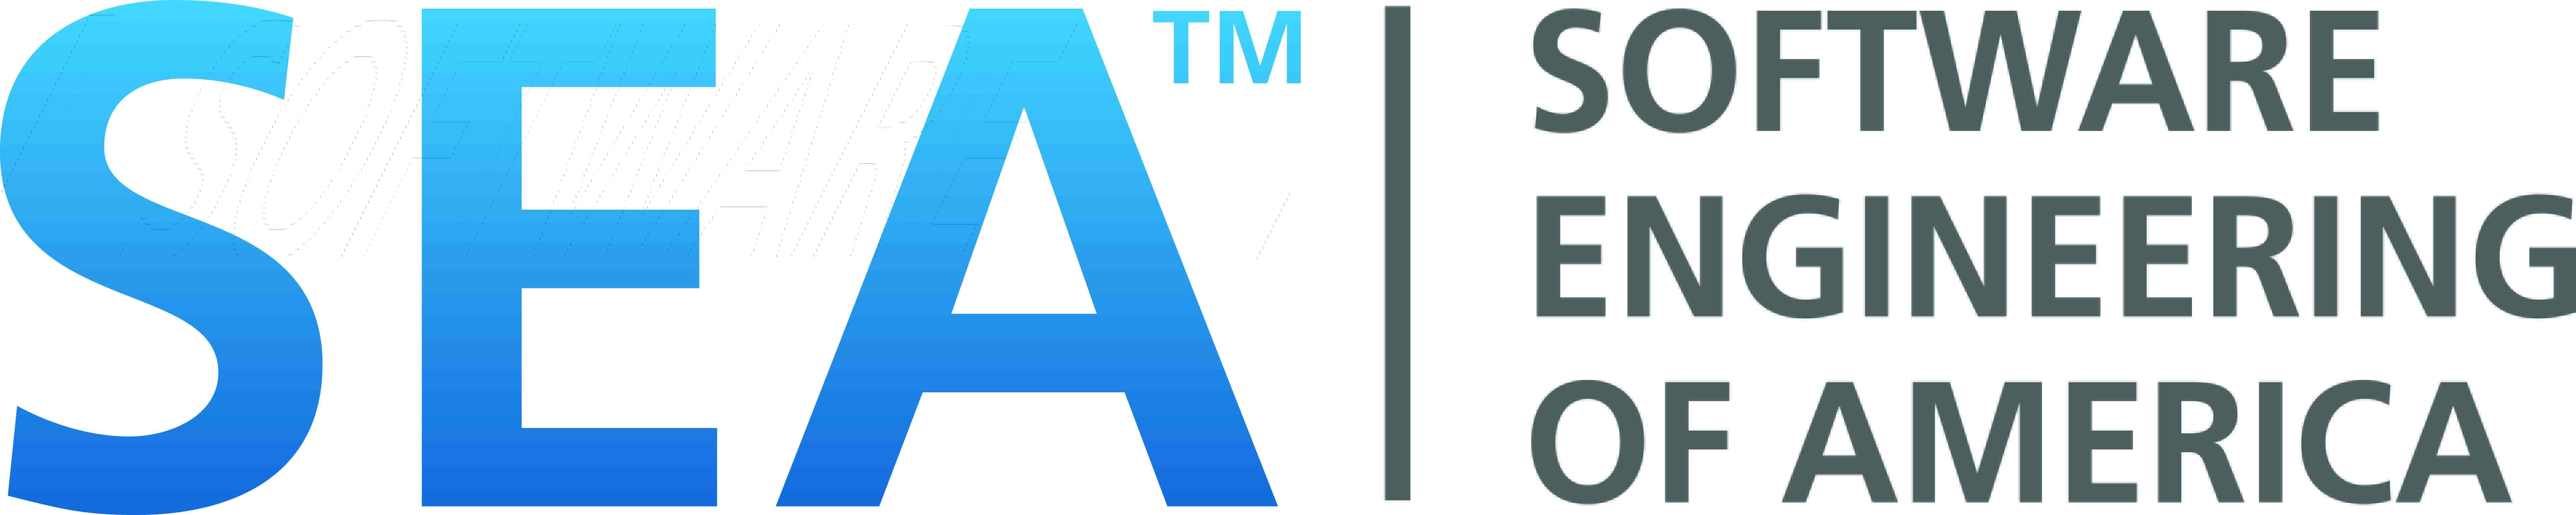 Software Engineering of America (SEA) – Enterprise Logo